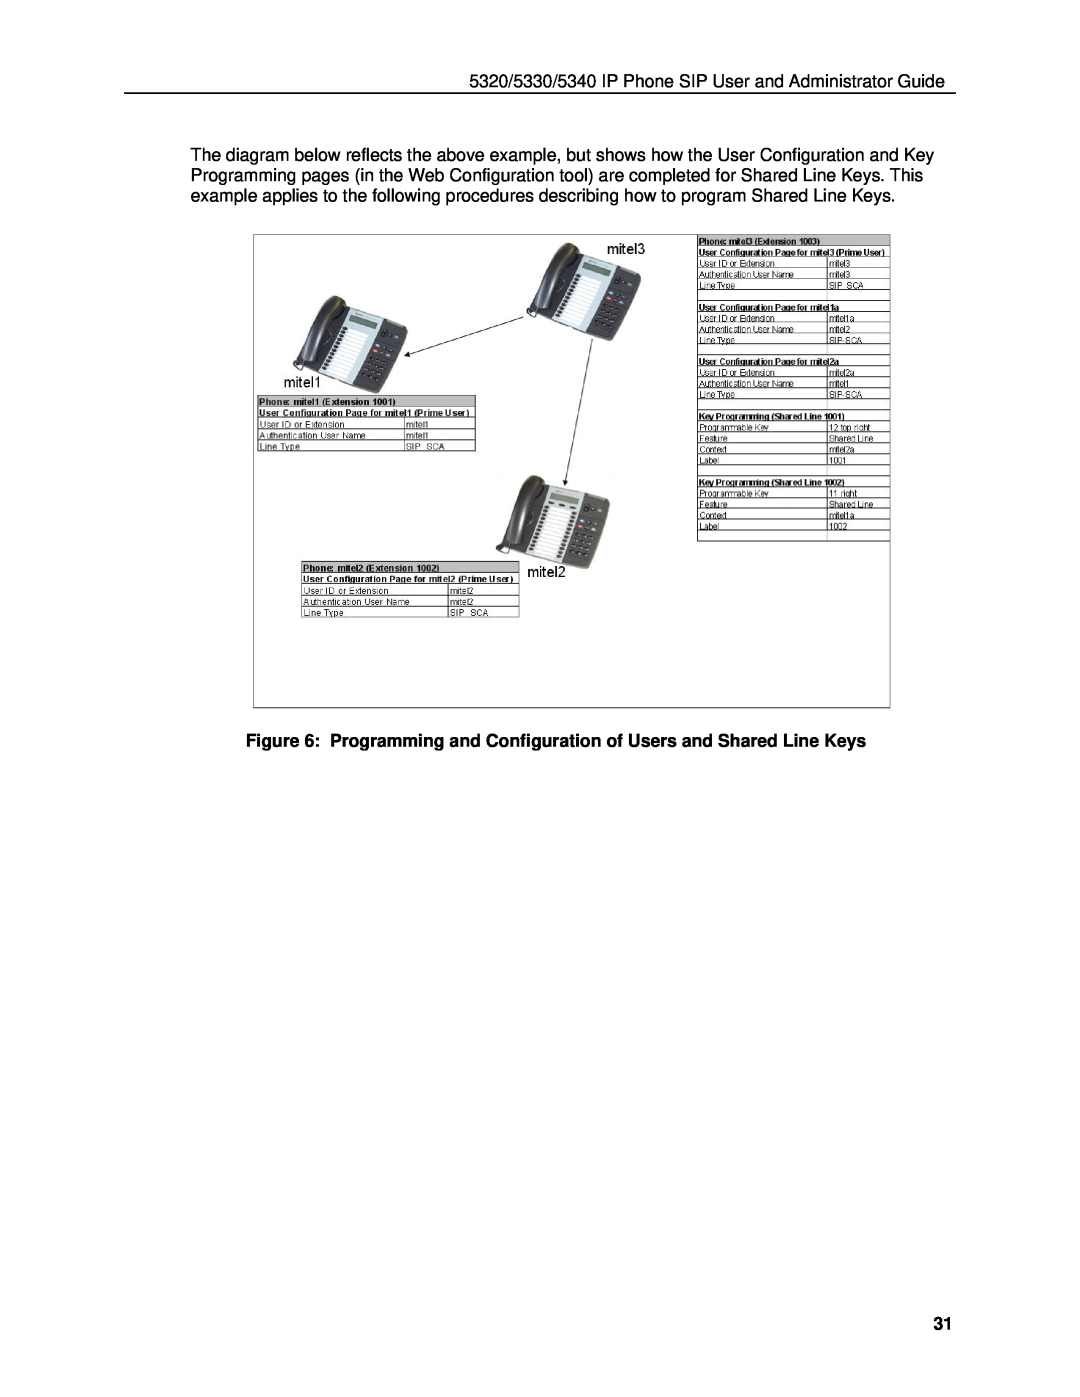 Mitel manual 5320/5330/5340 IP Phone SIP User and Administrator Guide 